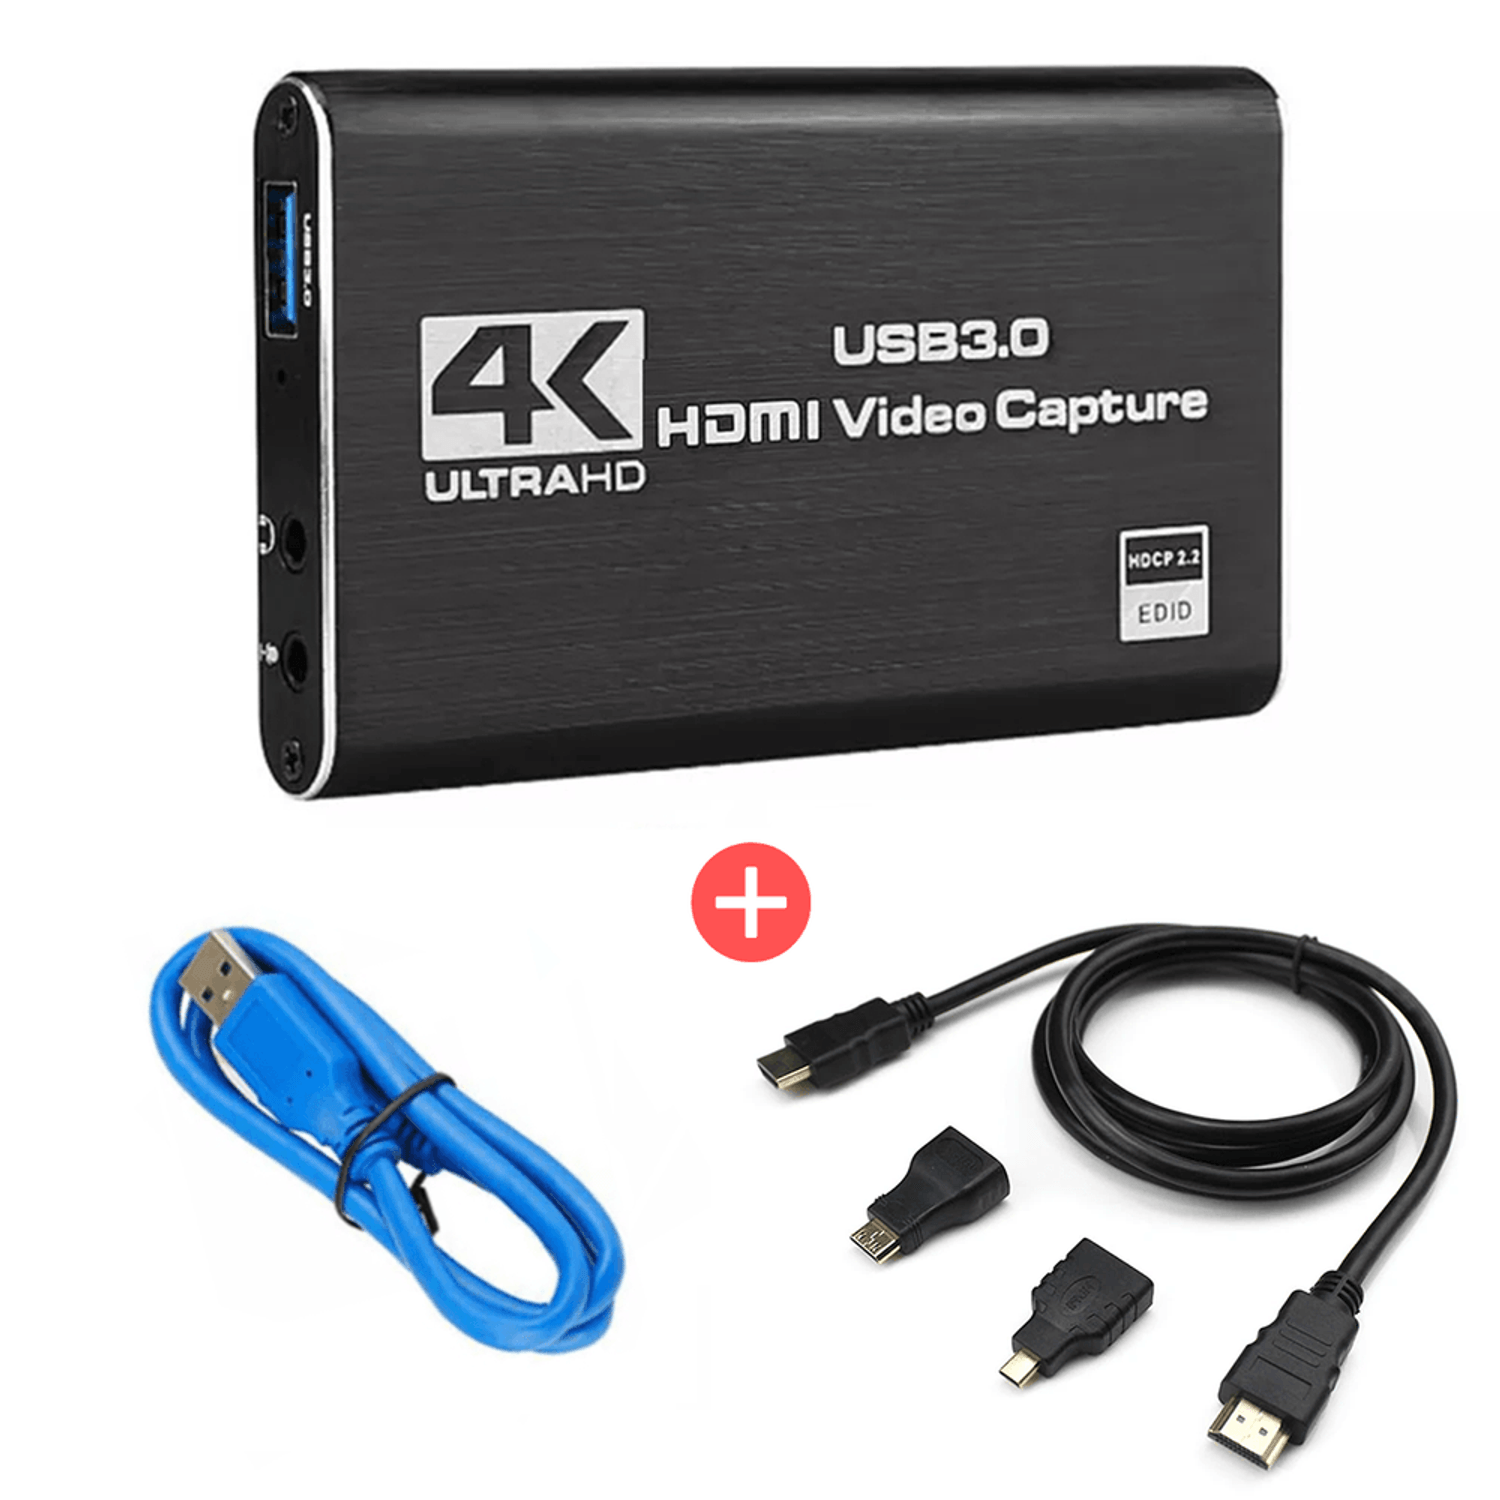 Capturadora Video Hdmi Usb 3.0 4k Multiplataforma + Cable HDMI I Oechsle -  Oechsle